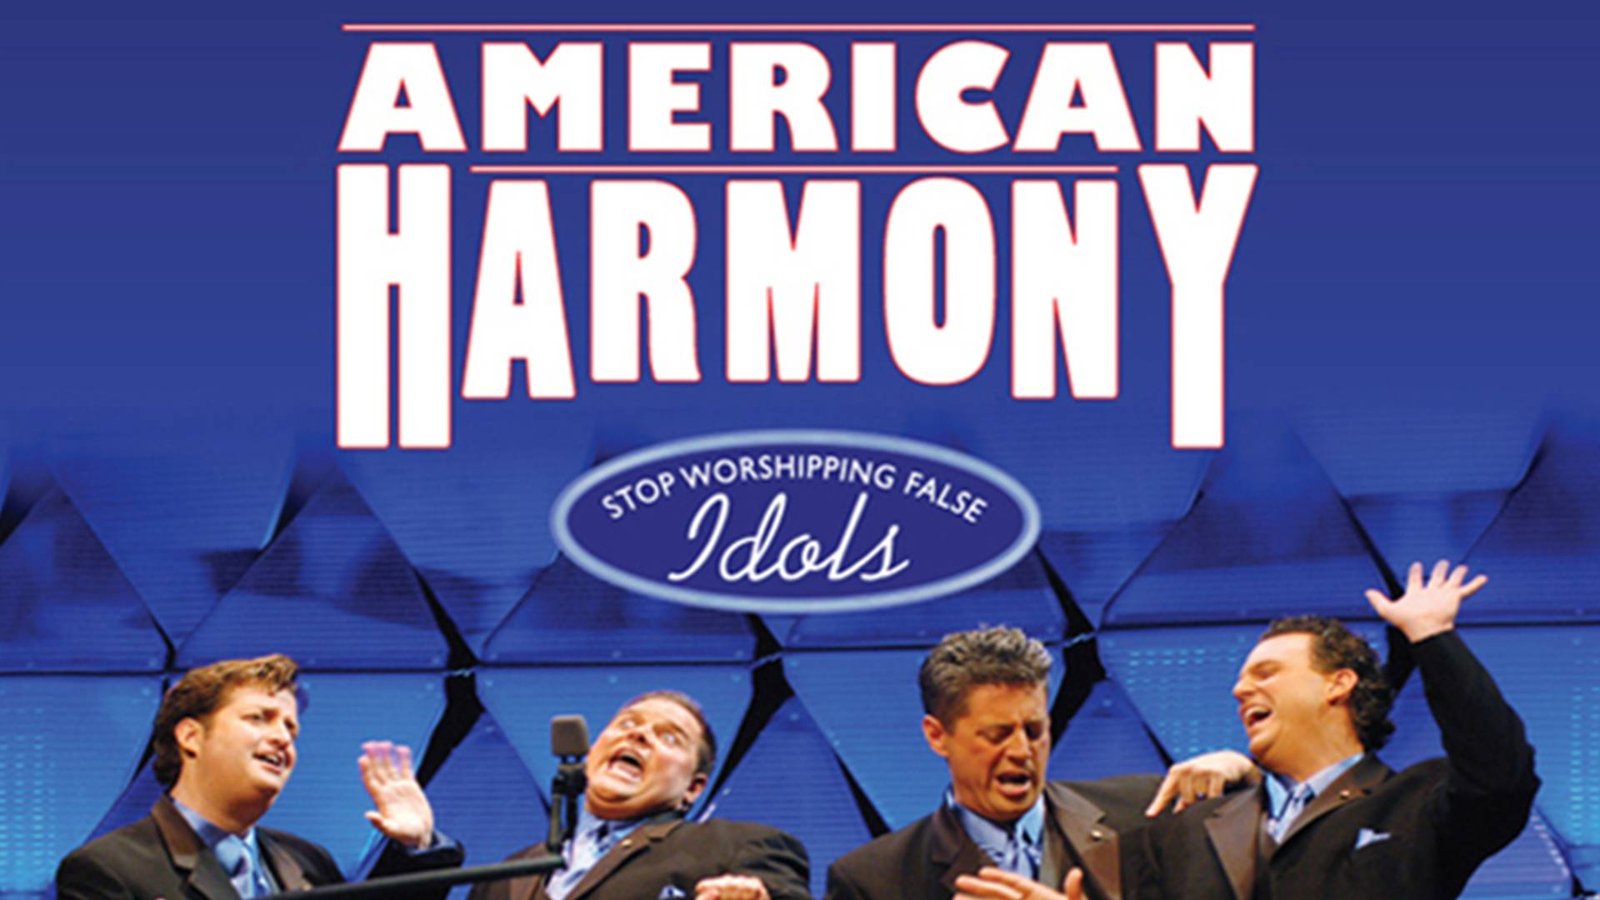 American Harmony